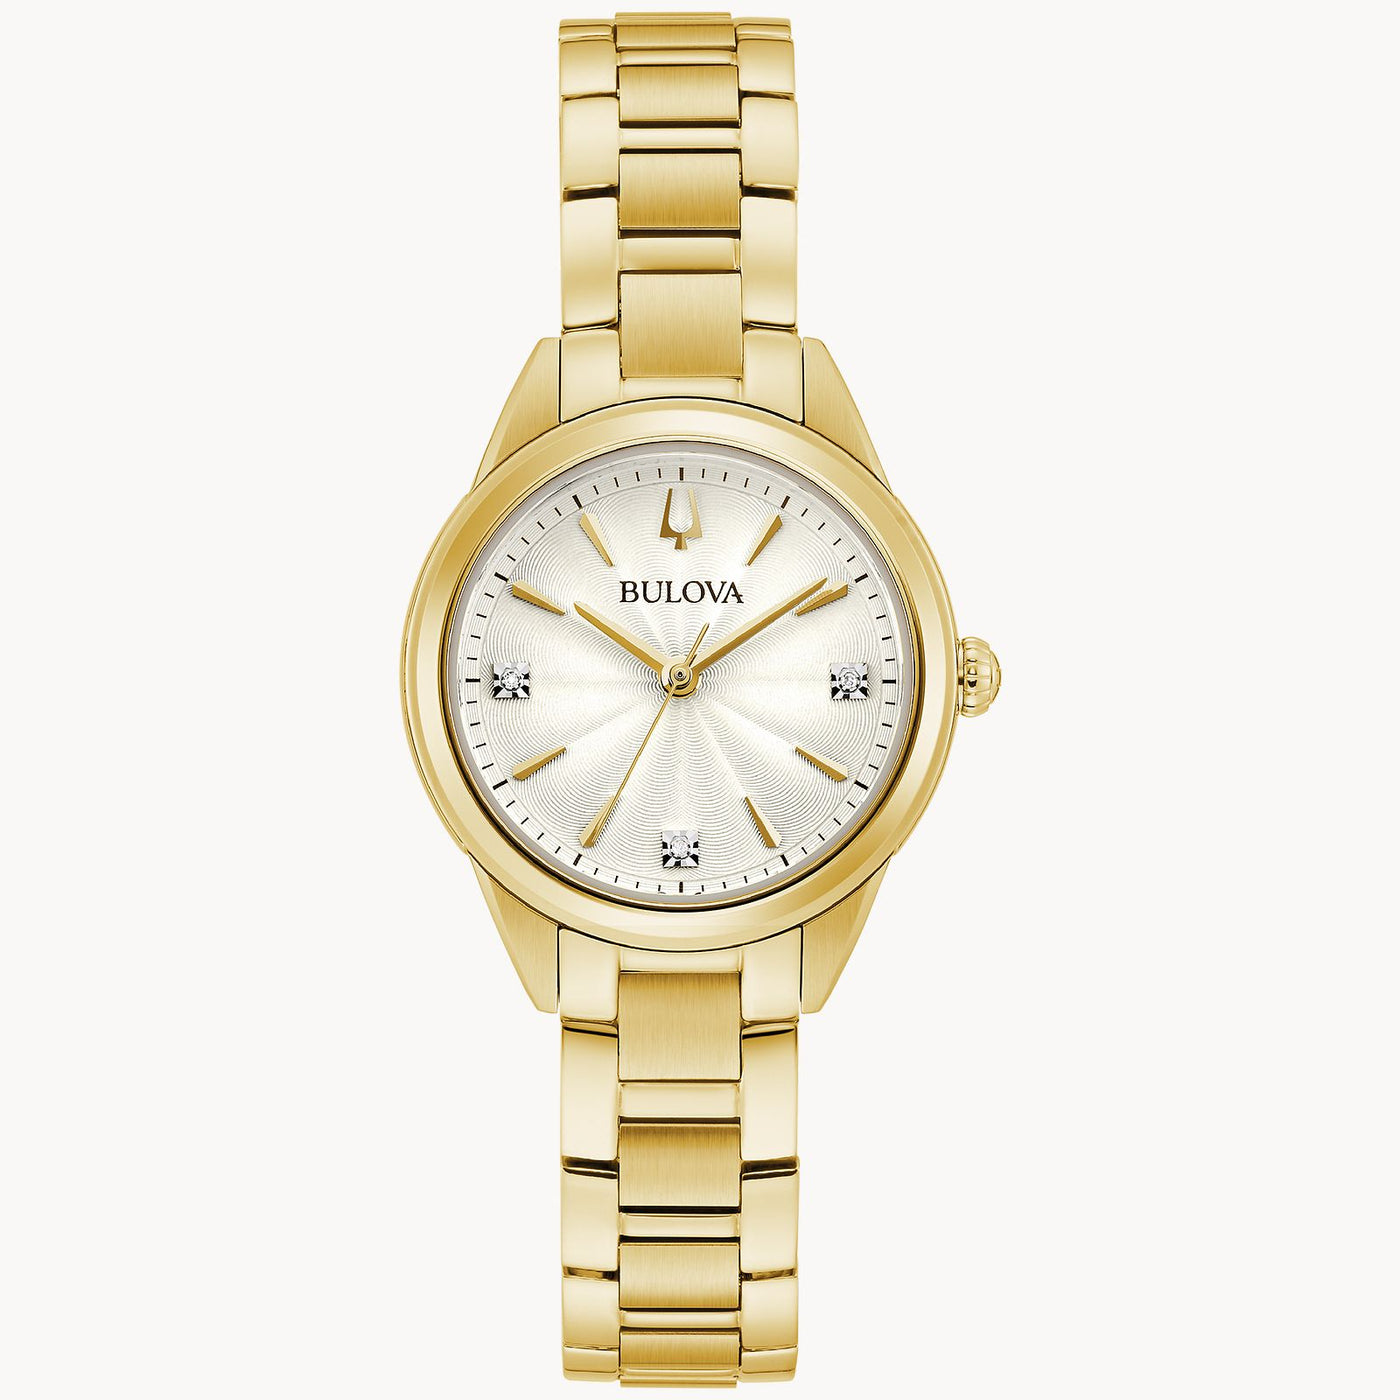 Lady's Gold Tone Bulova "Sutton" Watch with White Diamond Dial